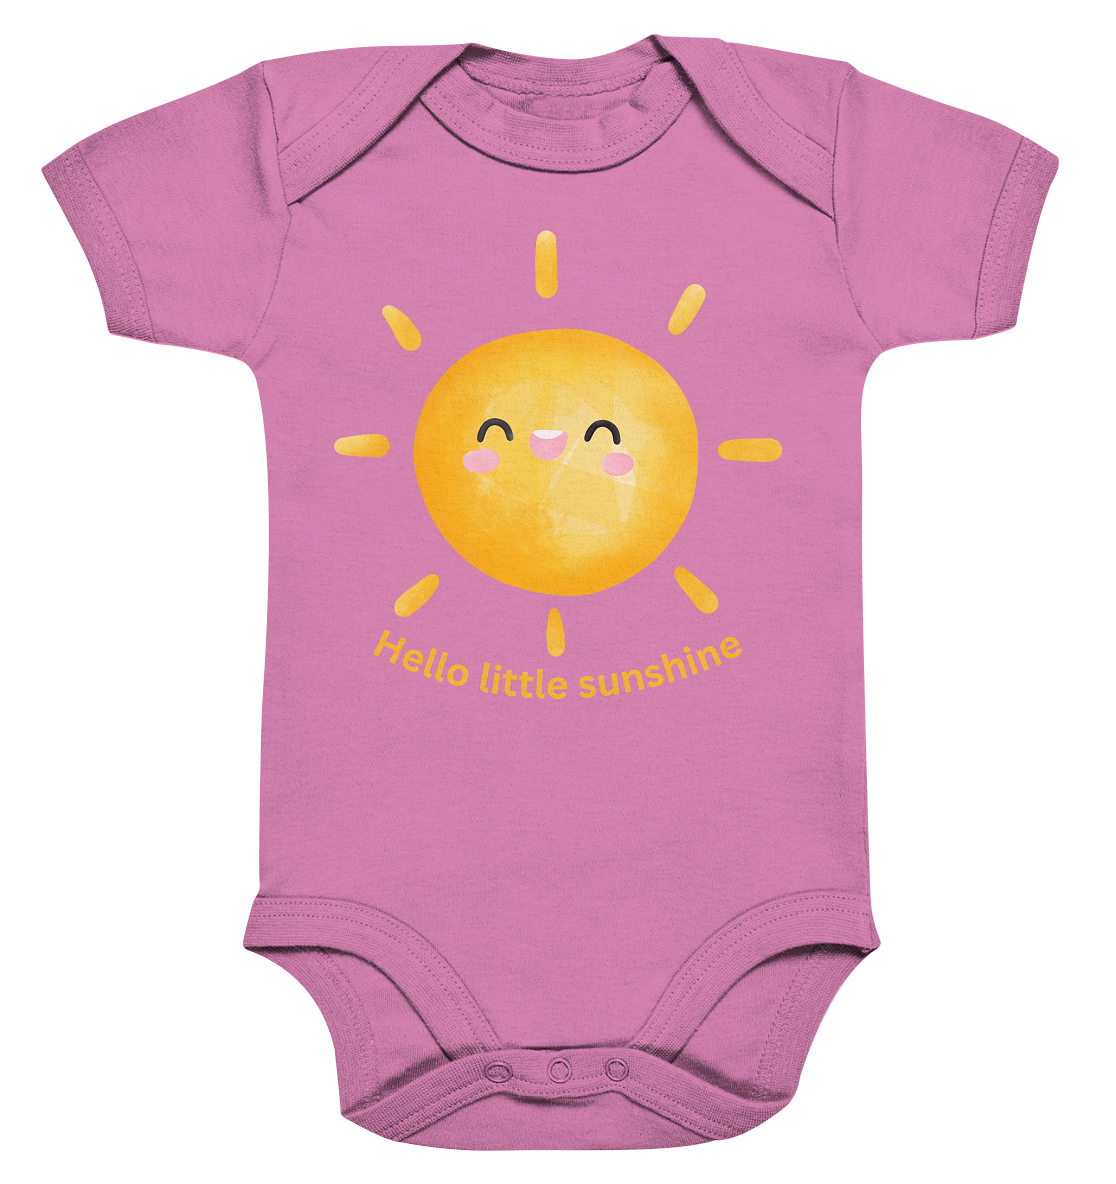 Baby Baumwoll Body "little sunshine"